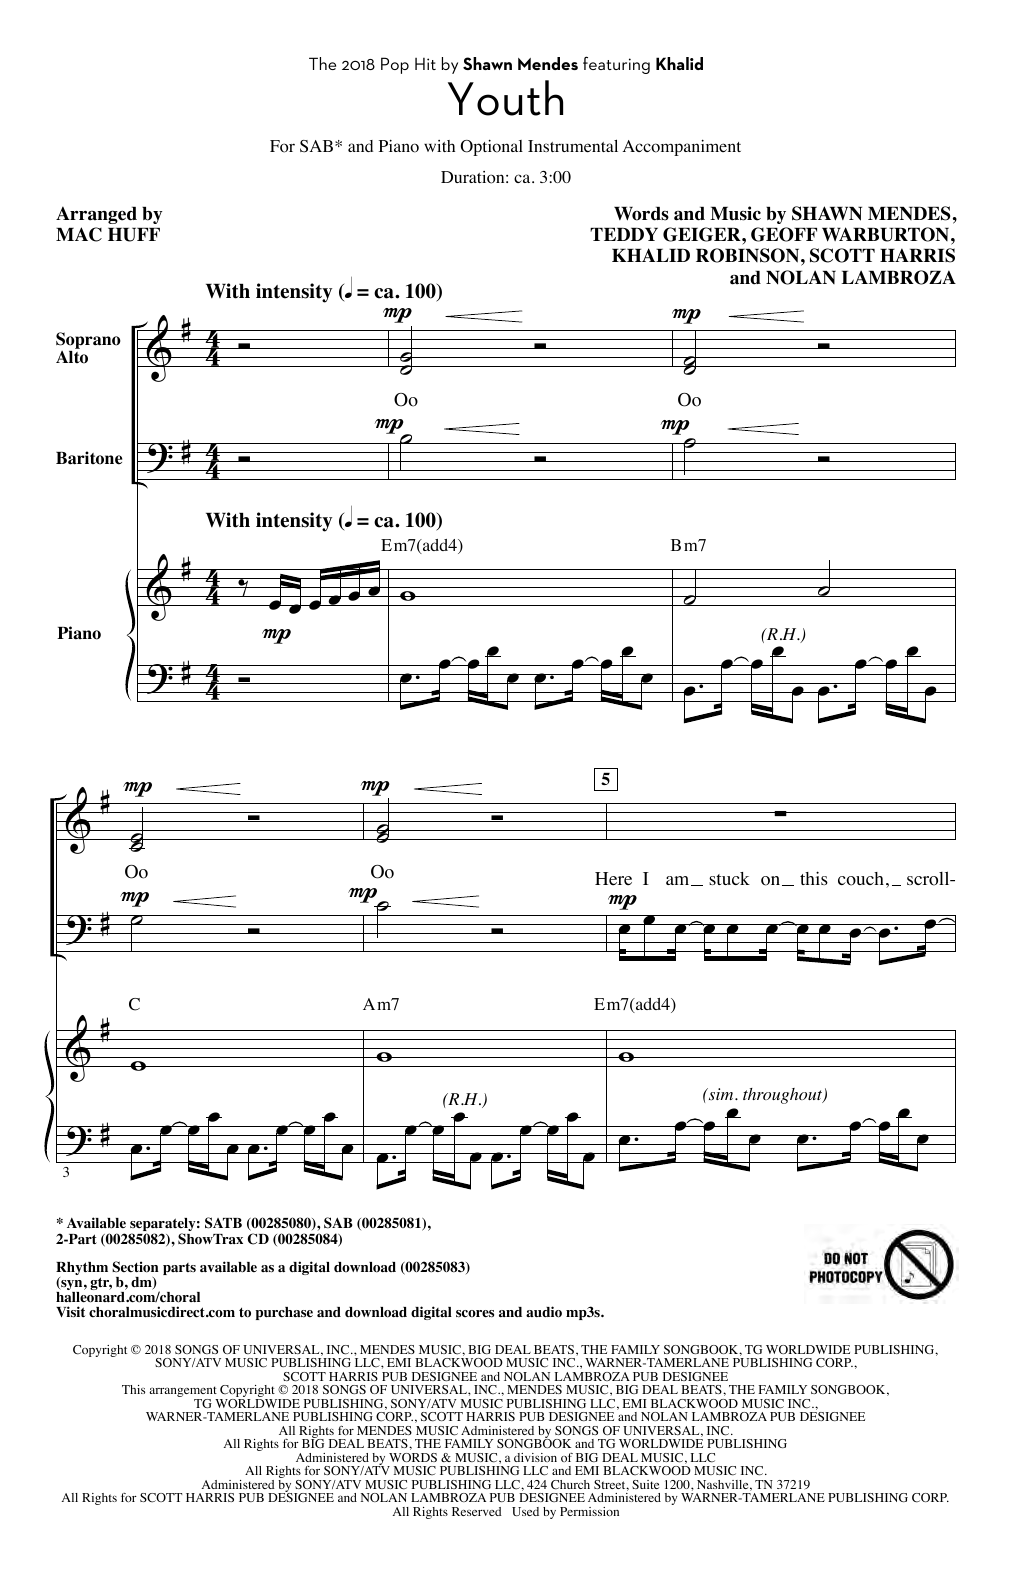 Shawn Mendes Youth (feat. Khalid) (arr. Mac Huff) Sheet Music Notes & Chords for SAB Choir - Download or Print PDF